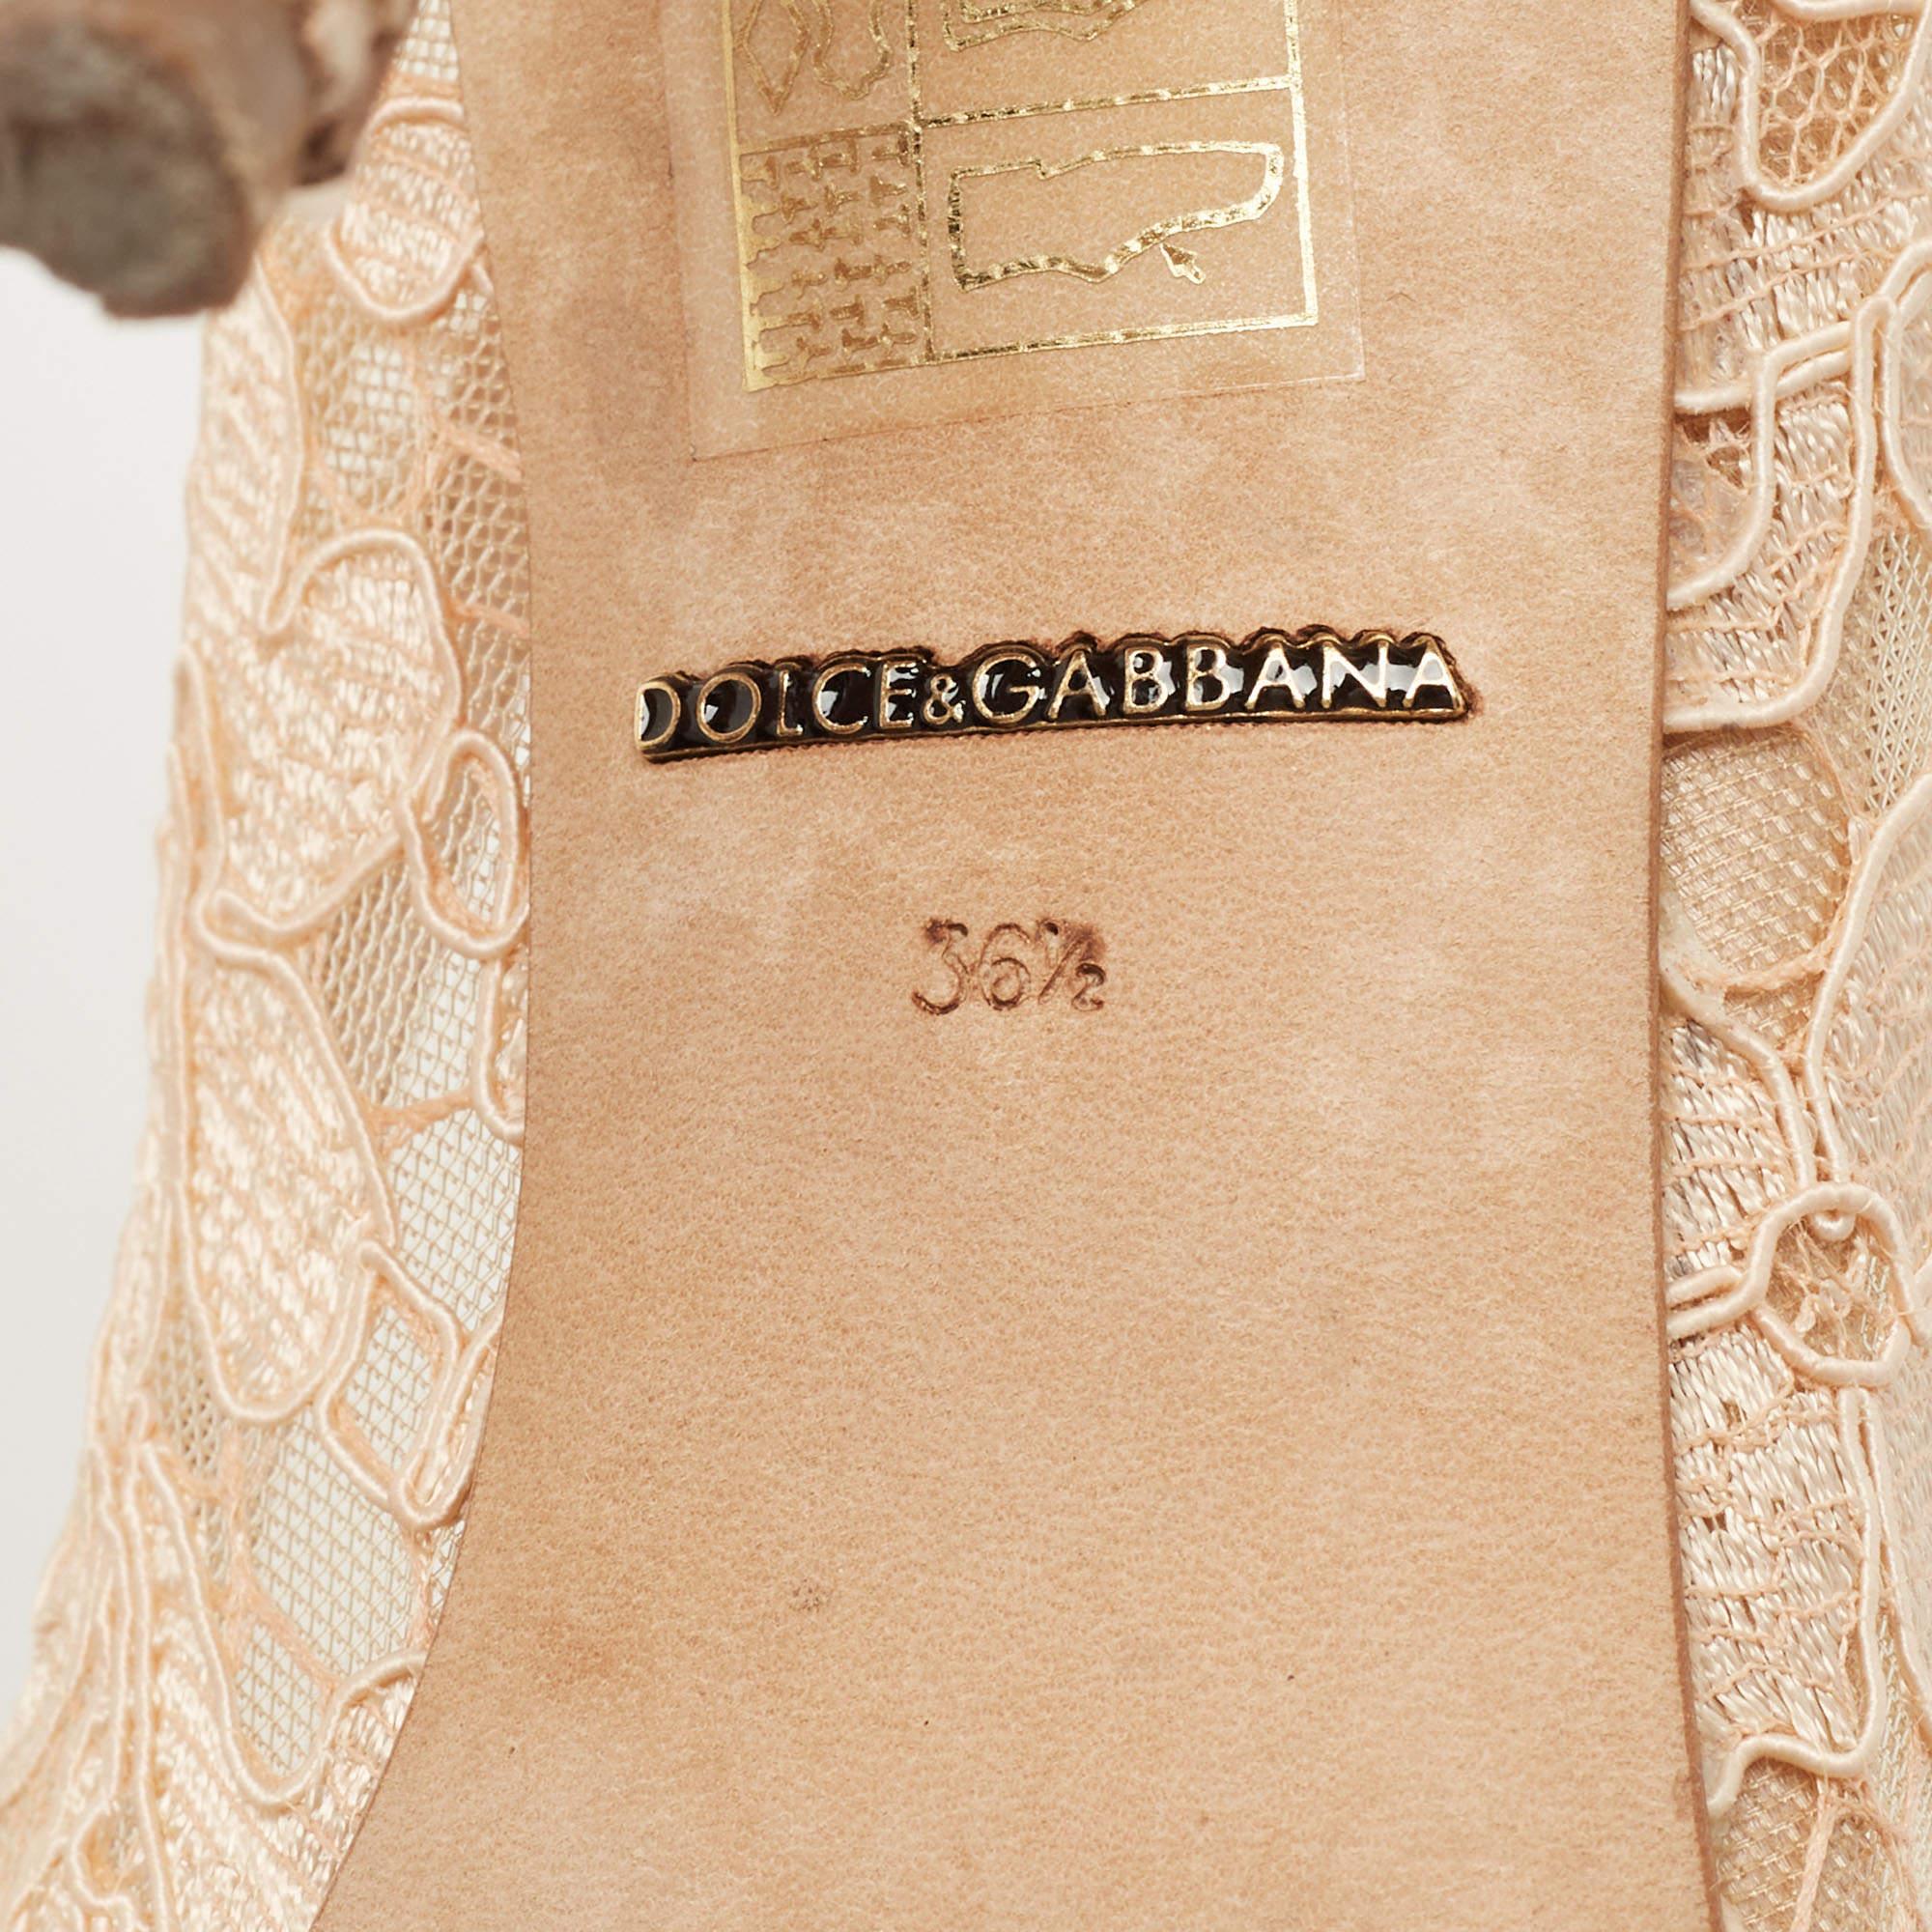 Dolce & Gabbana Beige Lace Crystal Embellished Bellucci Pumps Size 36.5 4